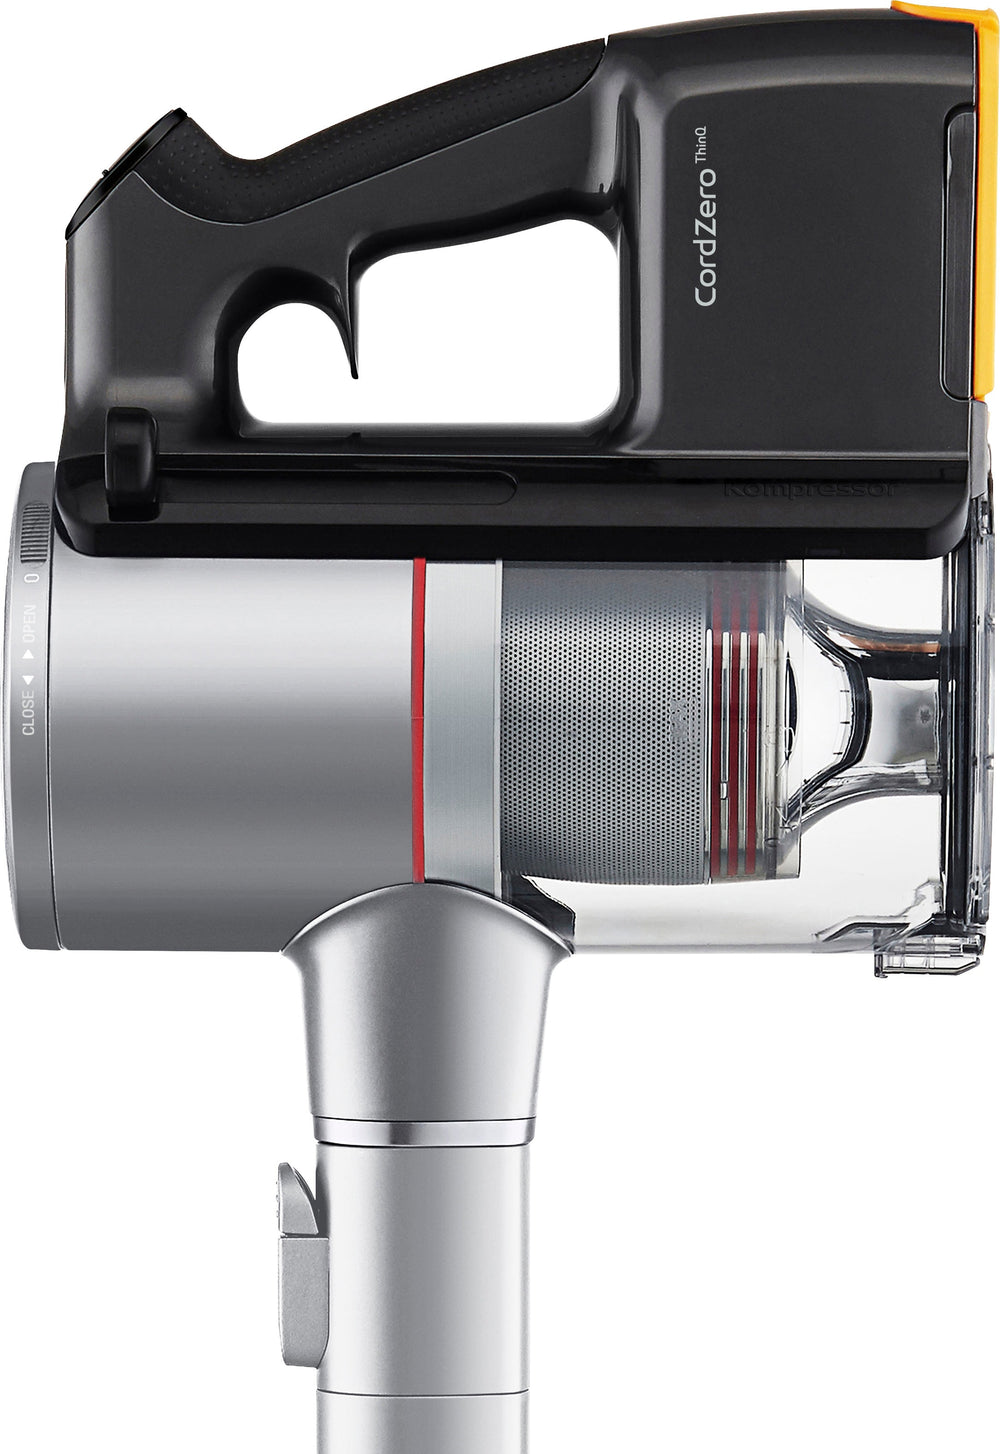 LG - CordZero Cordless Stick Vacuum with Kompressor technology - Matte Silver_1